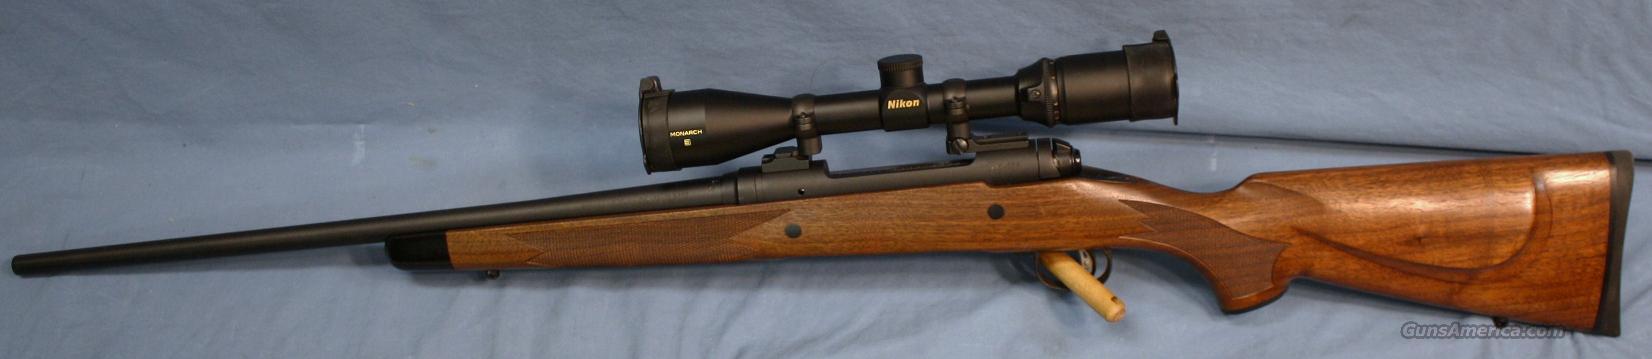 Savage 114 Rifle #7